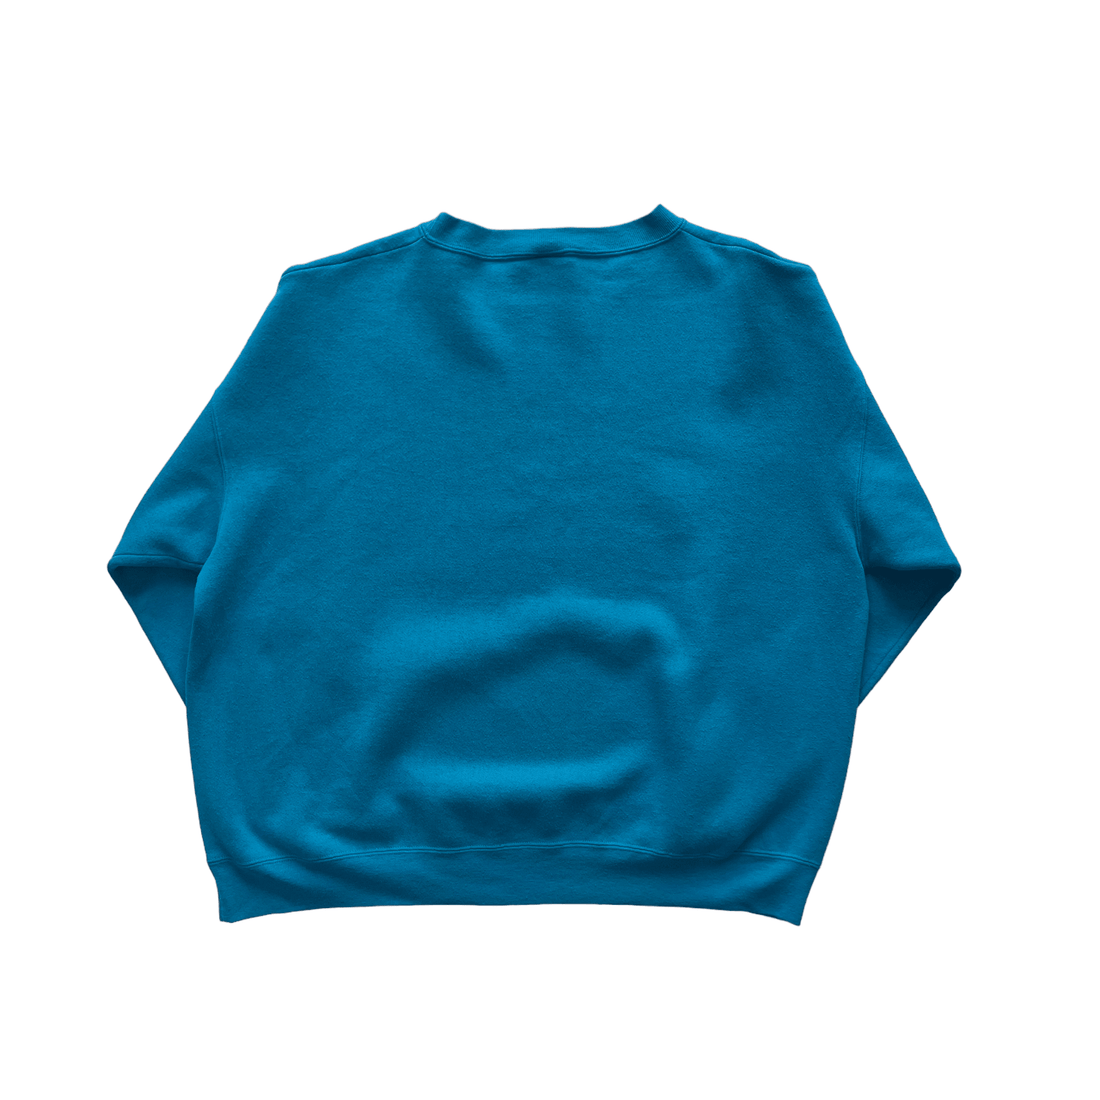 Vintage 90s Blue Nike Sweatshirt - Extra Large - The Streetwear Studio